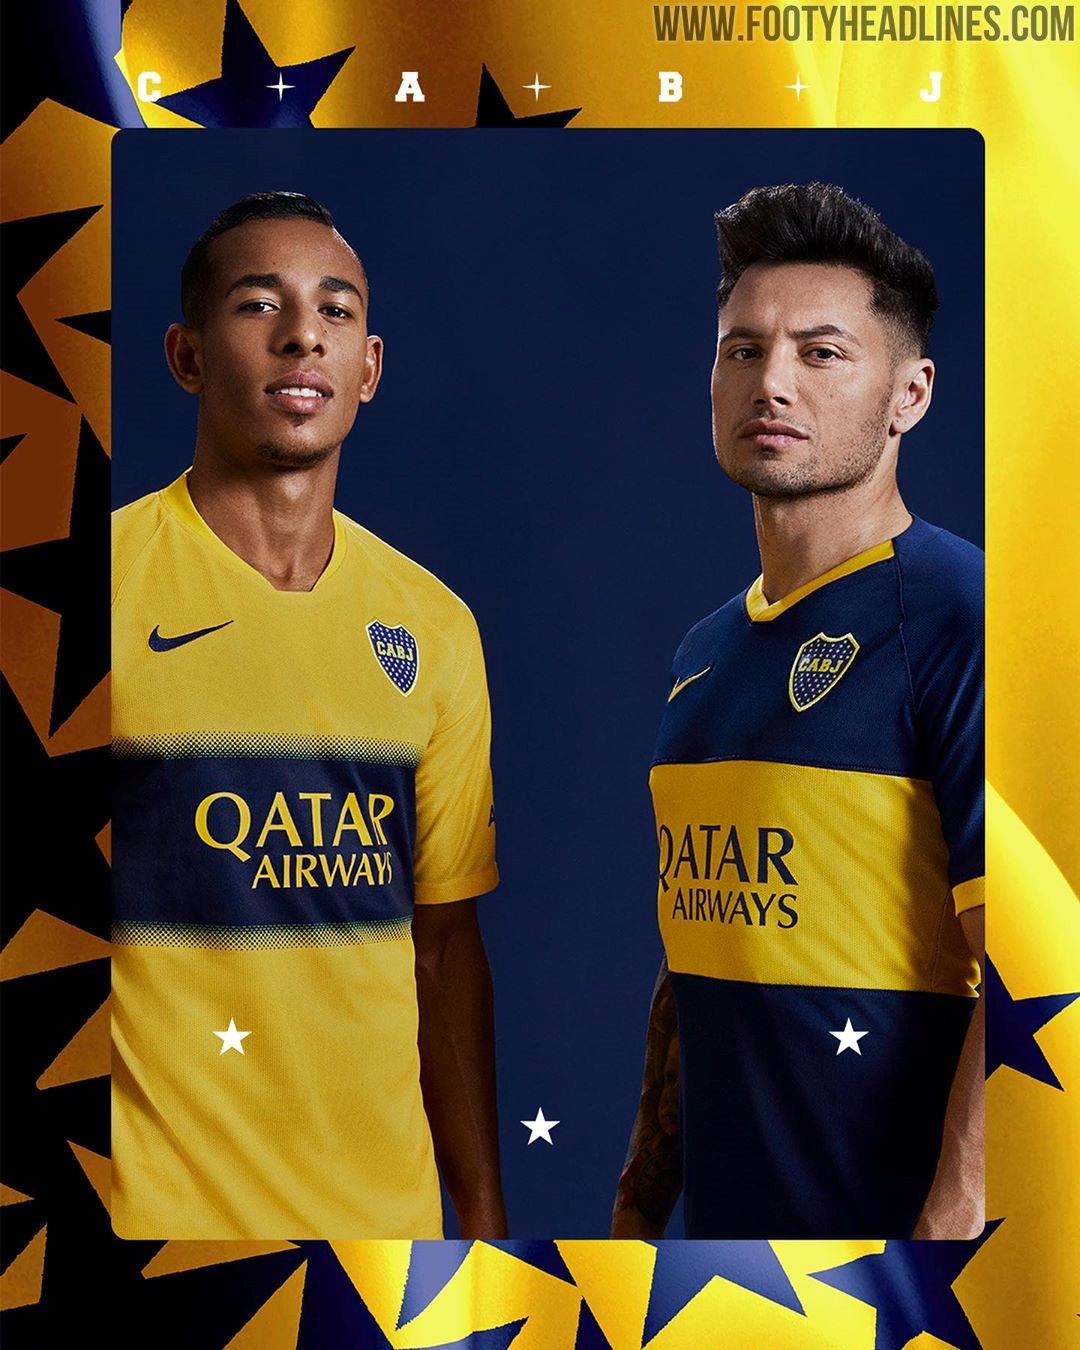 Boca Juniors Away Kit Released - Footy Headlines